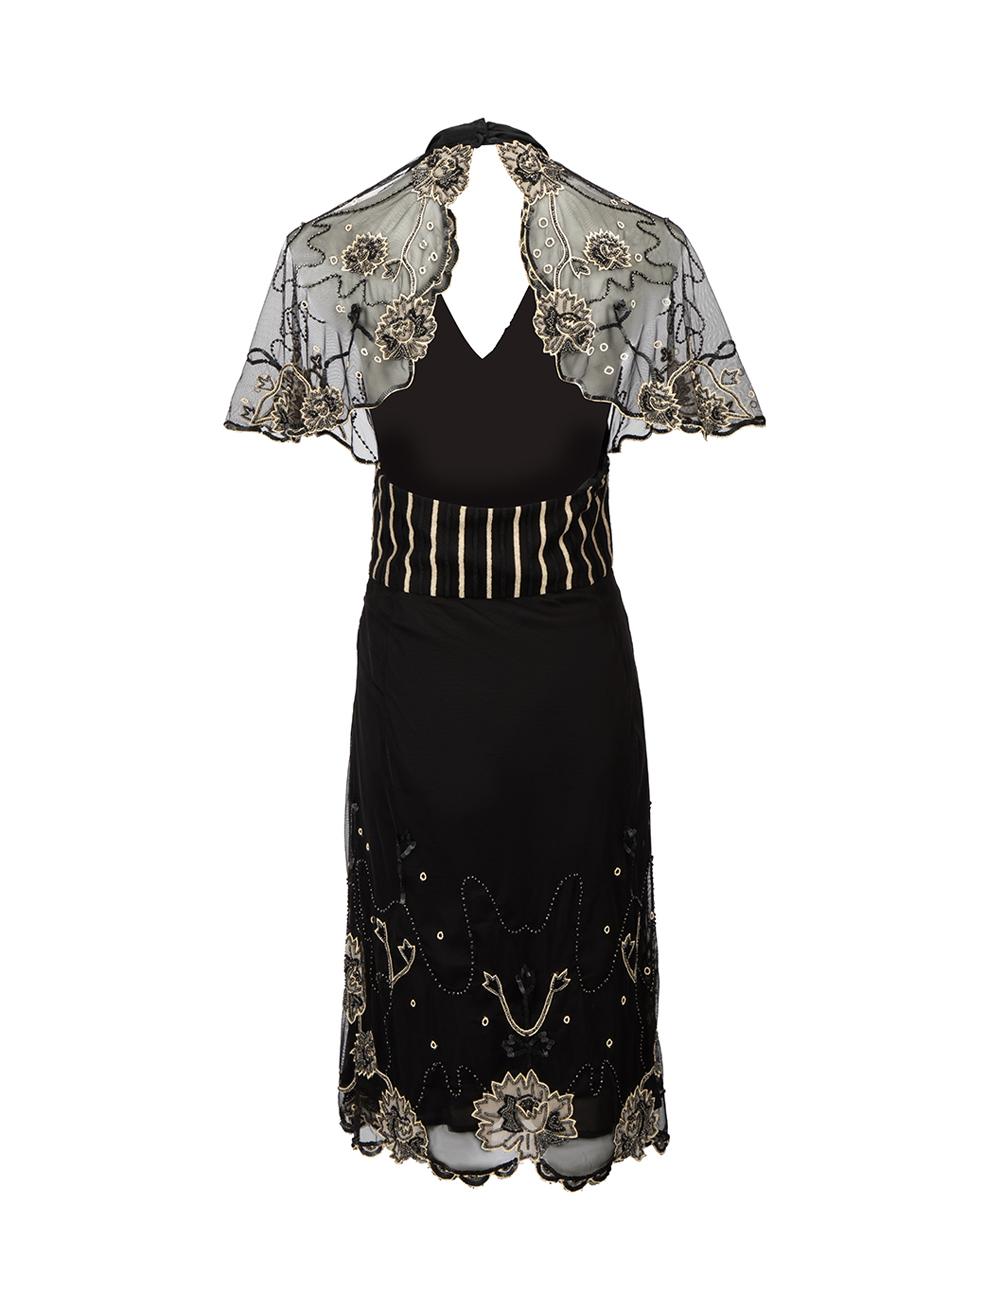 Black Floral Embellished Halterneck Knee Length Dress Size M In Good Condition For Sale In London, GB